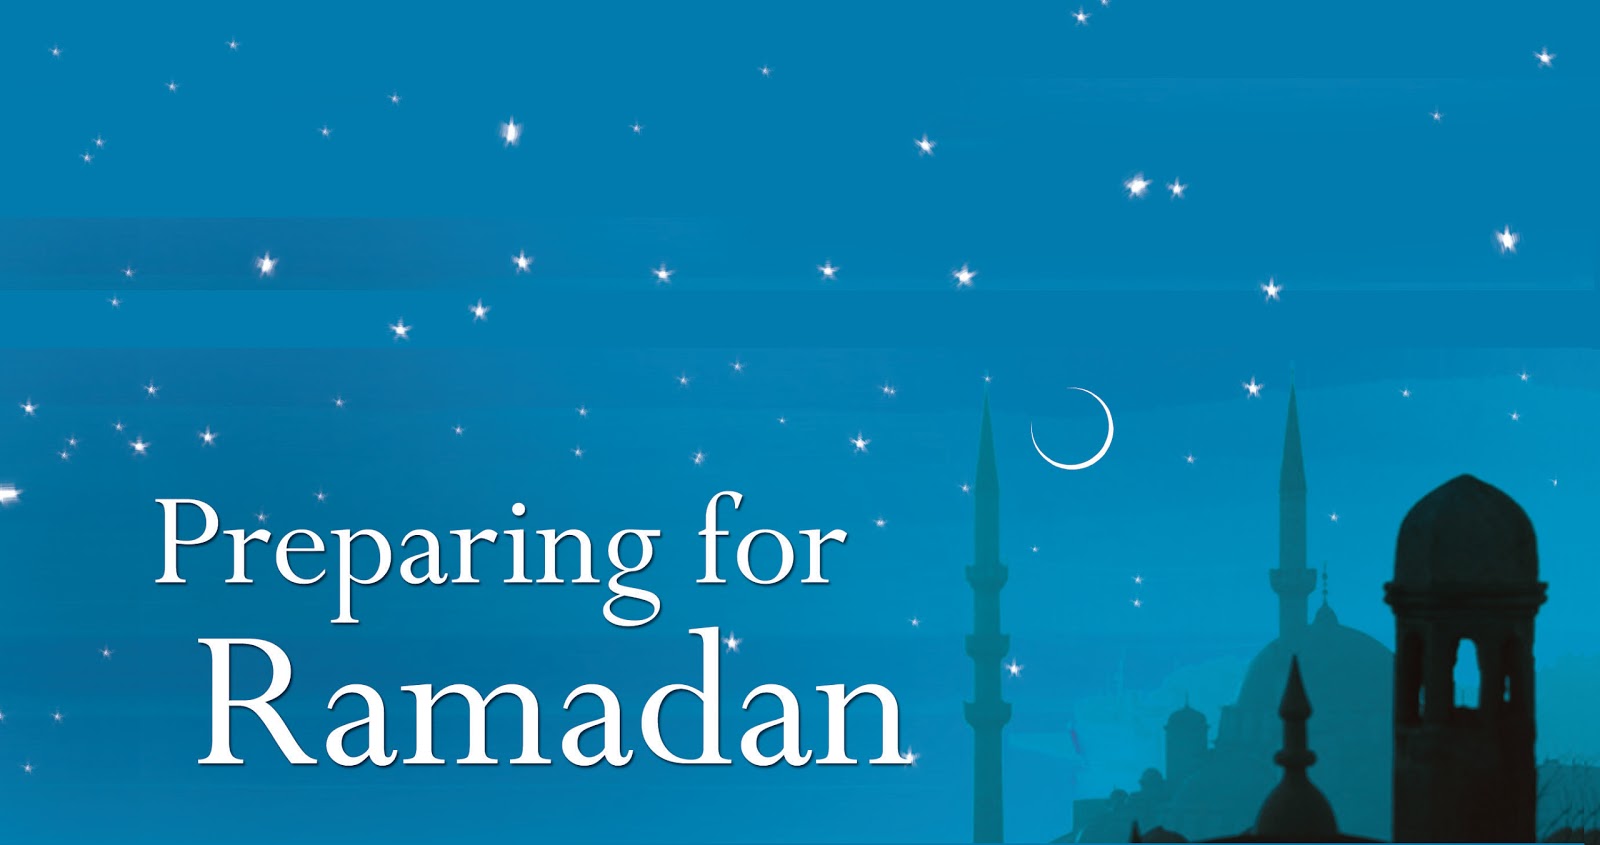 Hiba - The Blog: Preparing for Ramadan